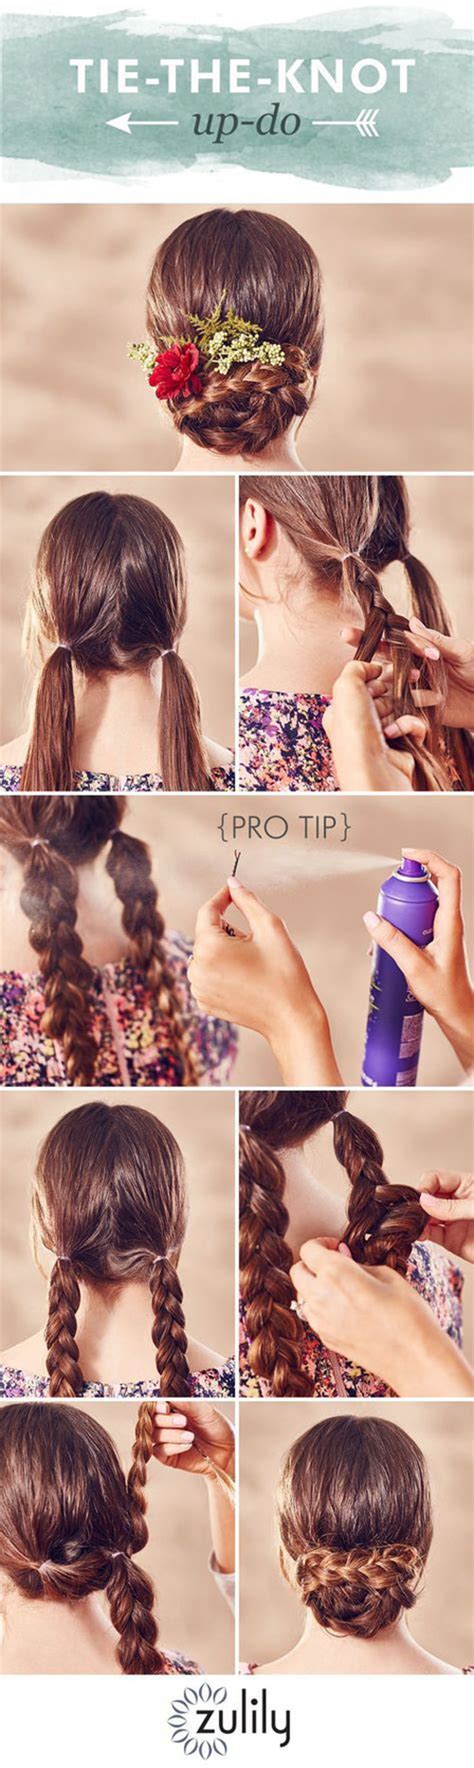 easy step  step summer hairstyle tutorials  beginners